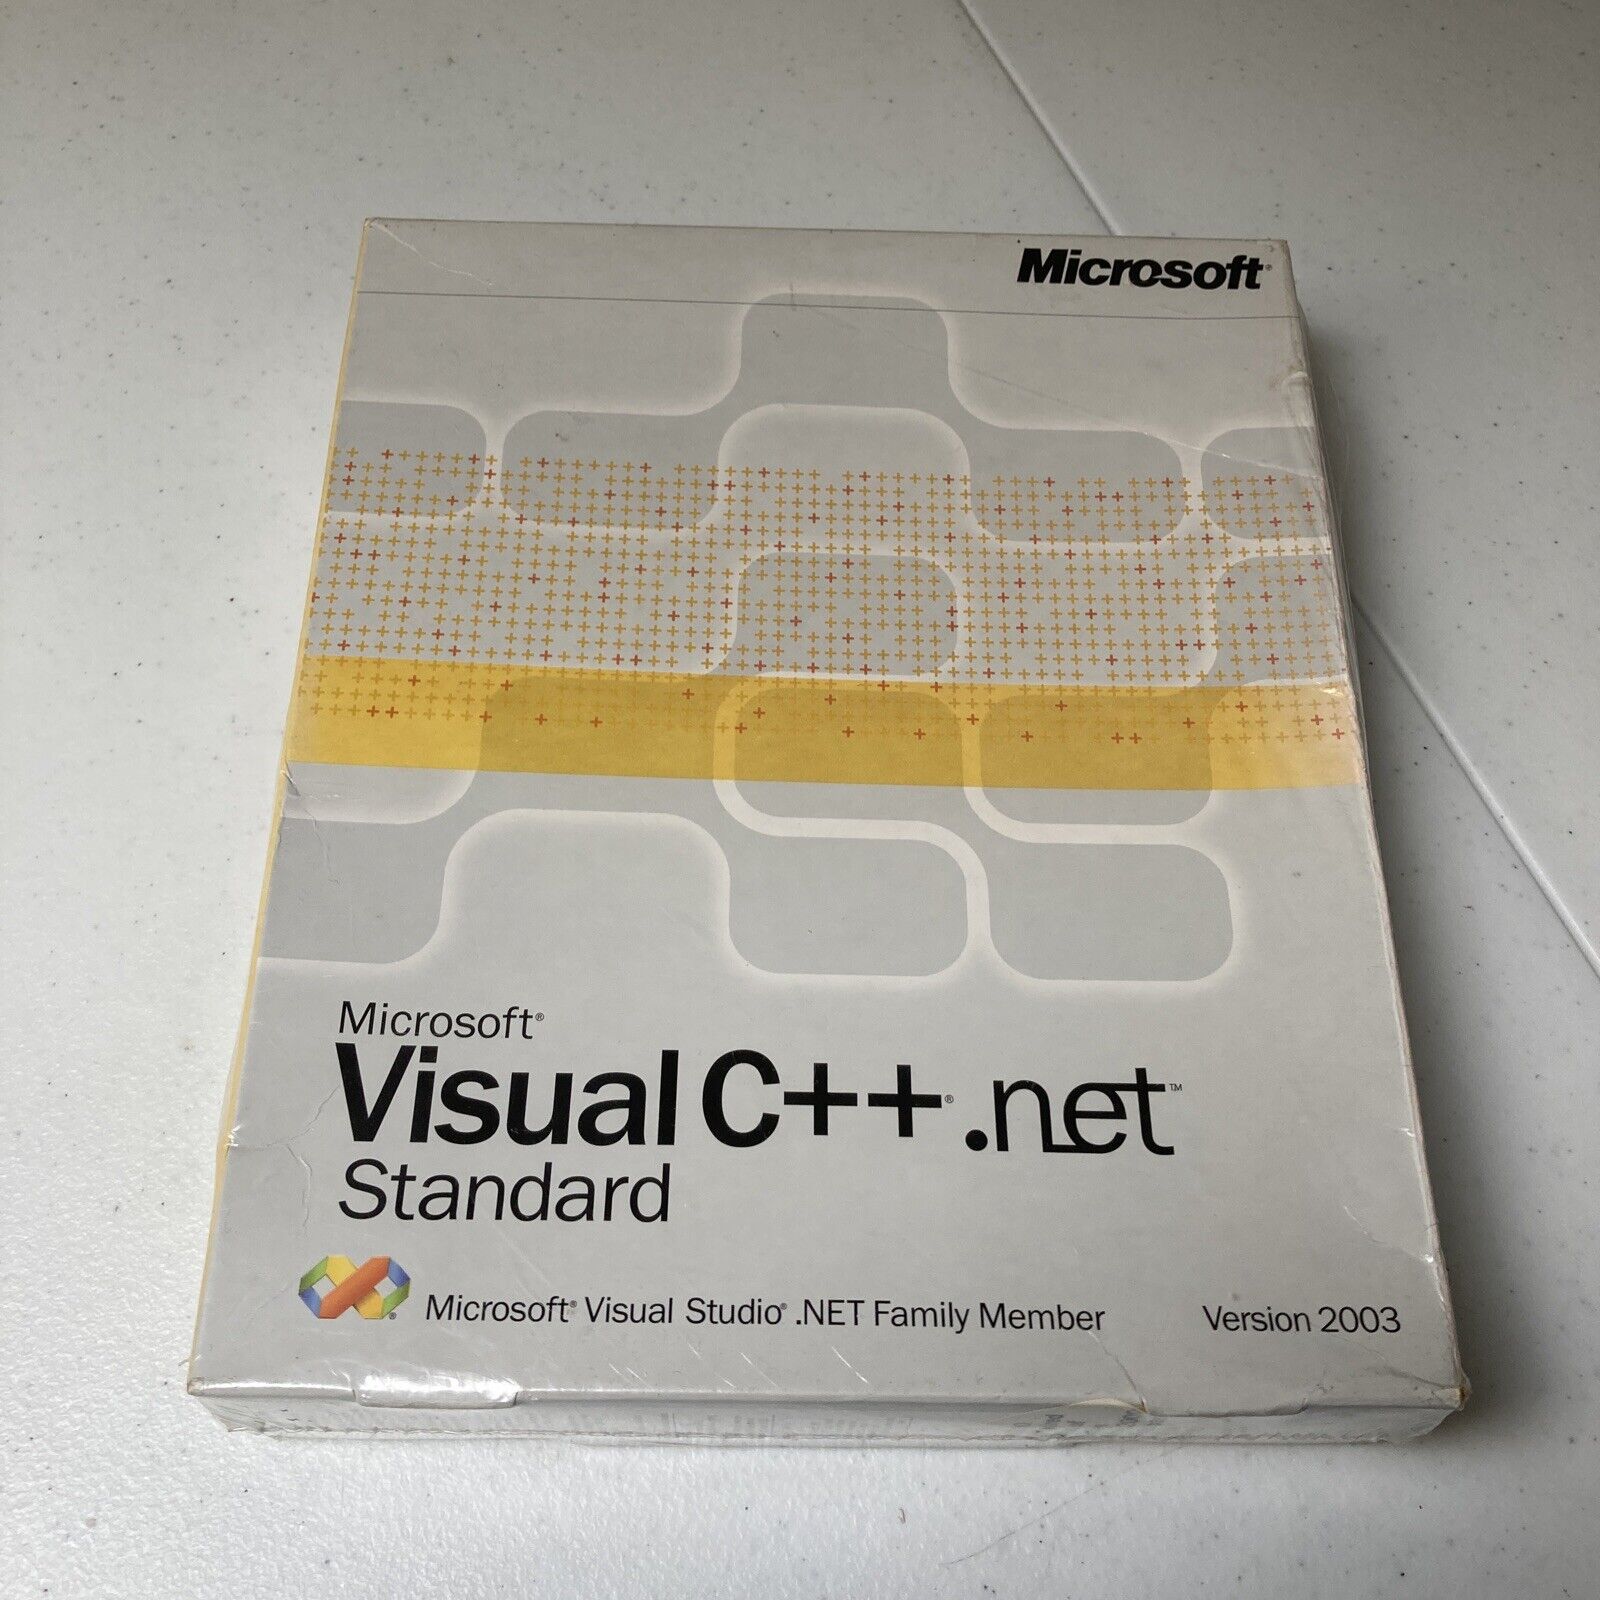 Microsoft Visual C++ .NET Standard Edition 2003 Version Sealed New Damaged Box